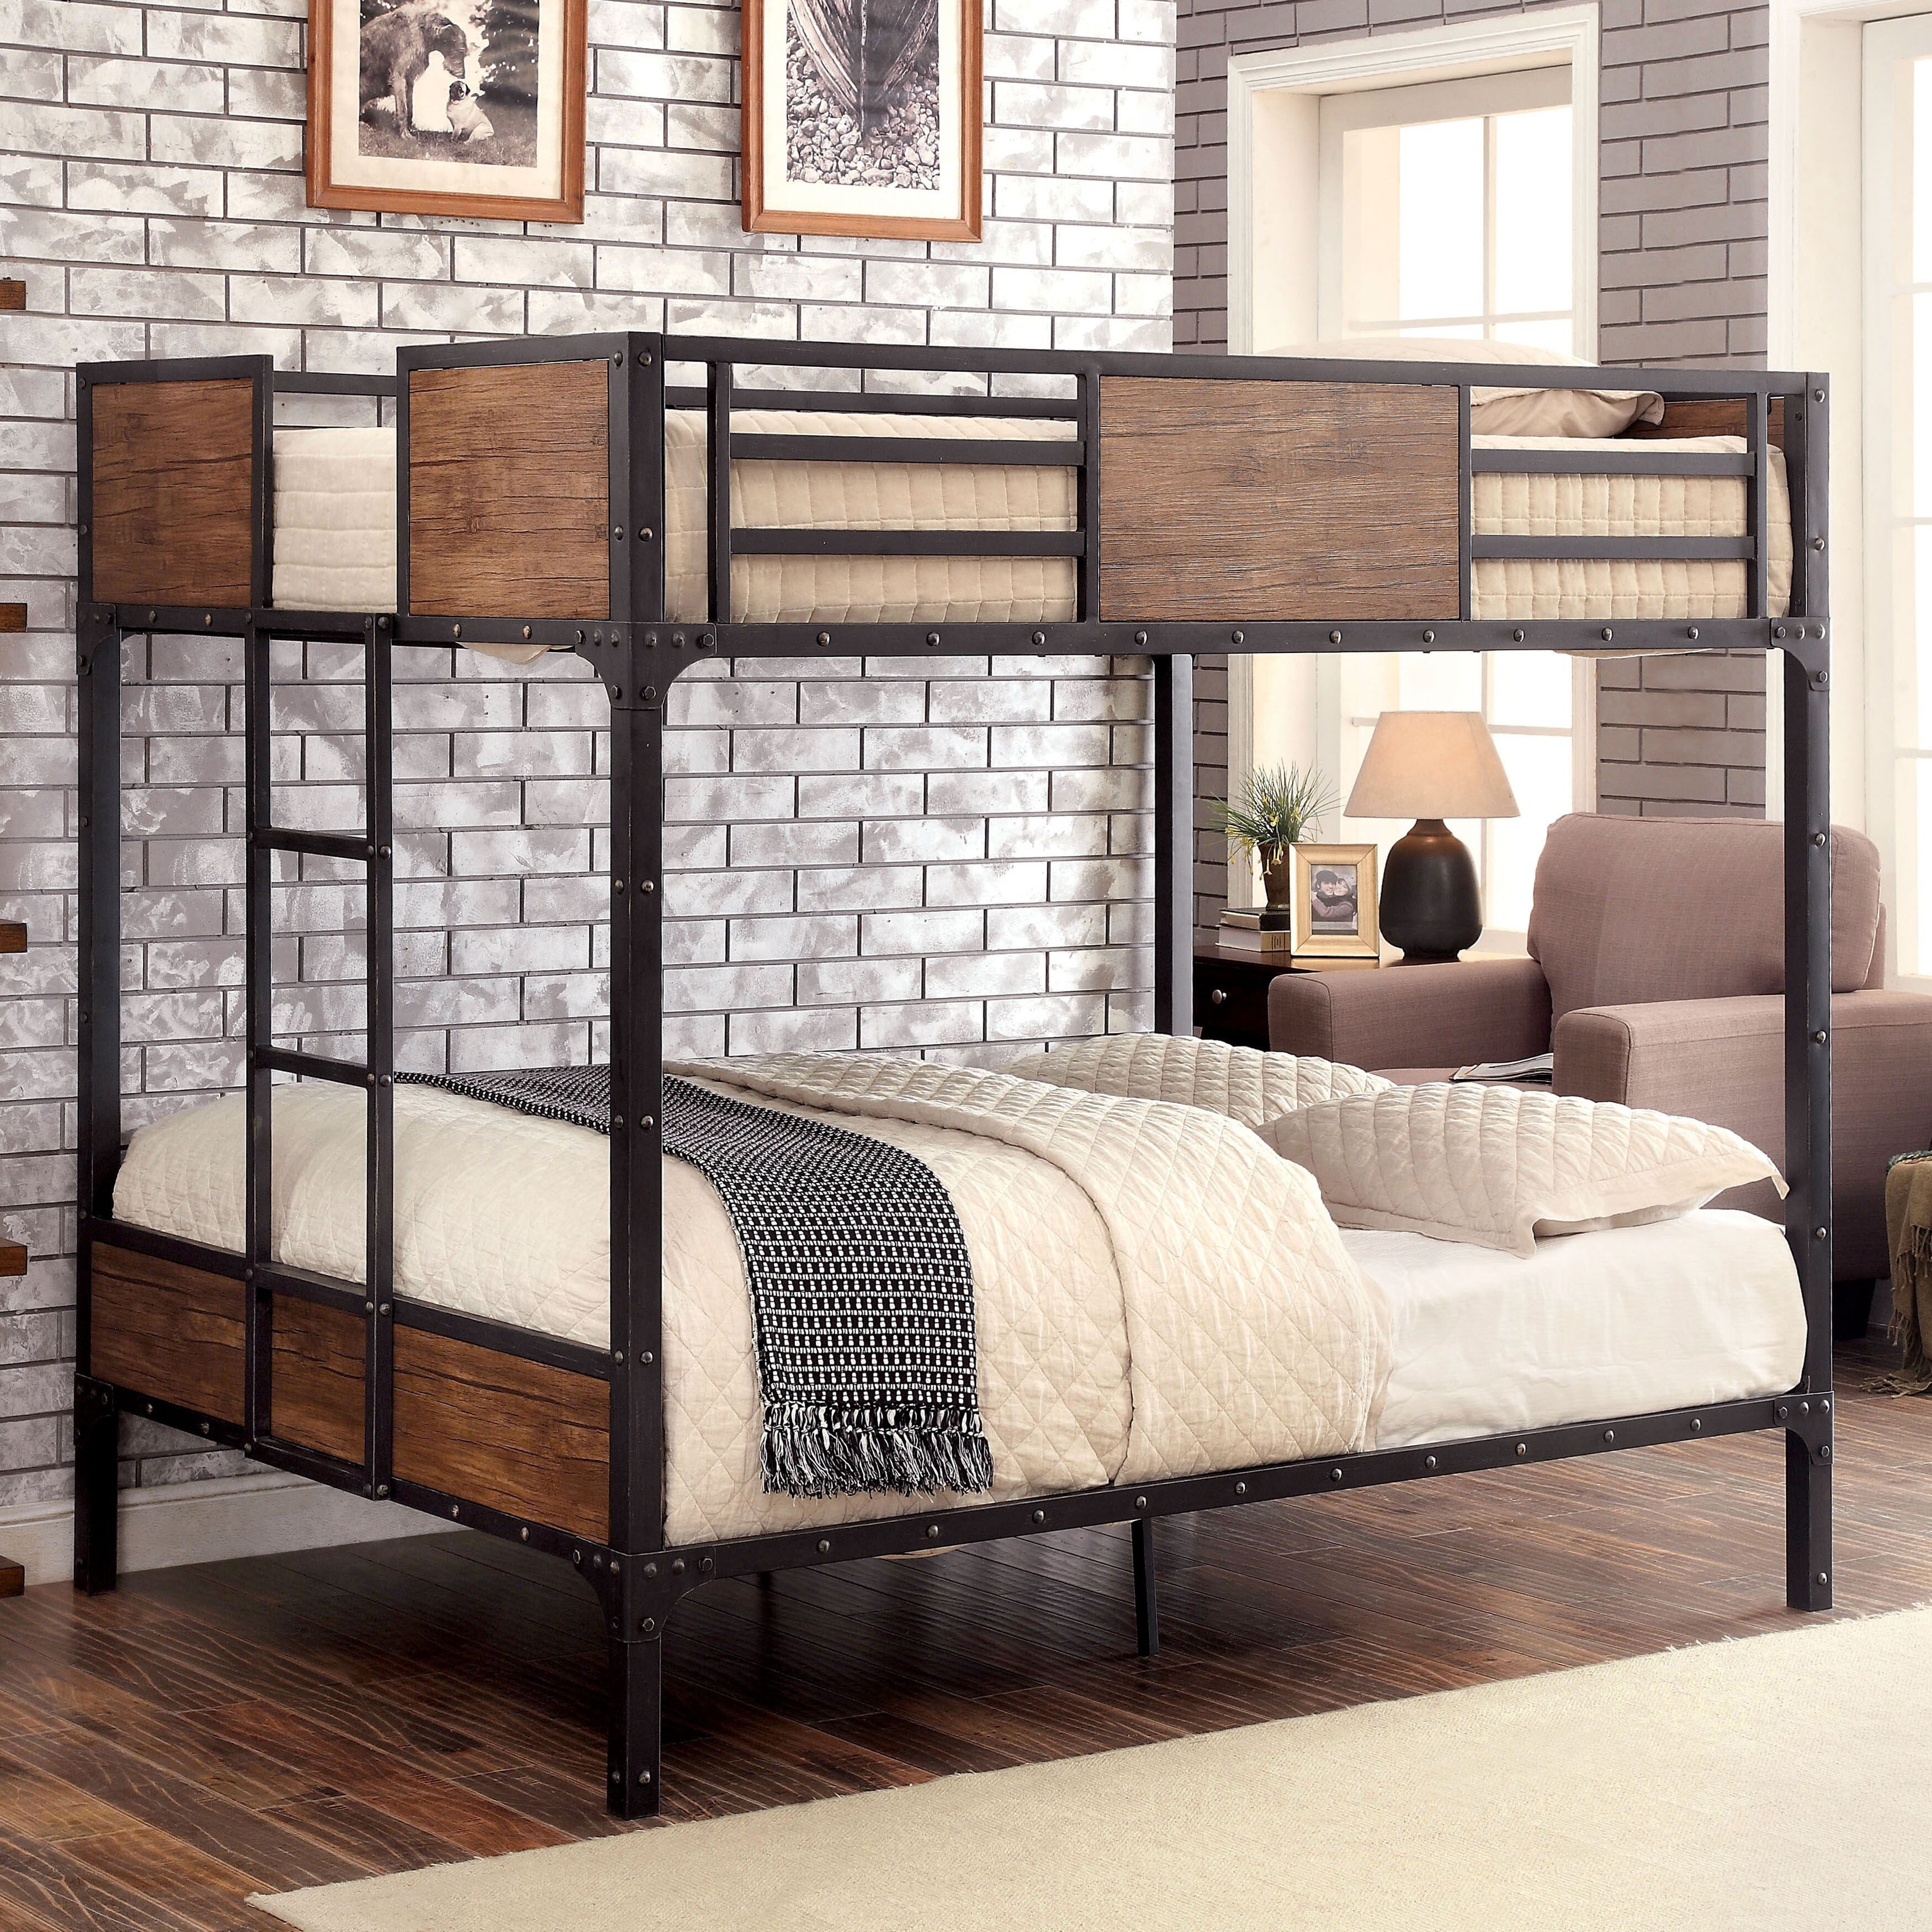 Industrial Style Bedroom Furniture Elegant Inspirational Furniture America Markain Industrial Metal